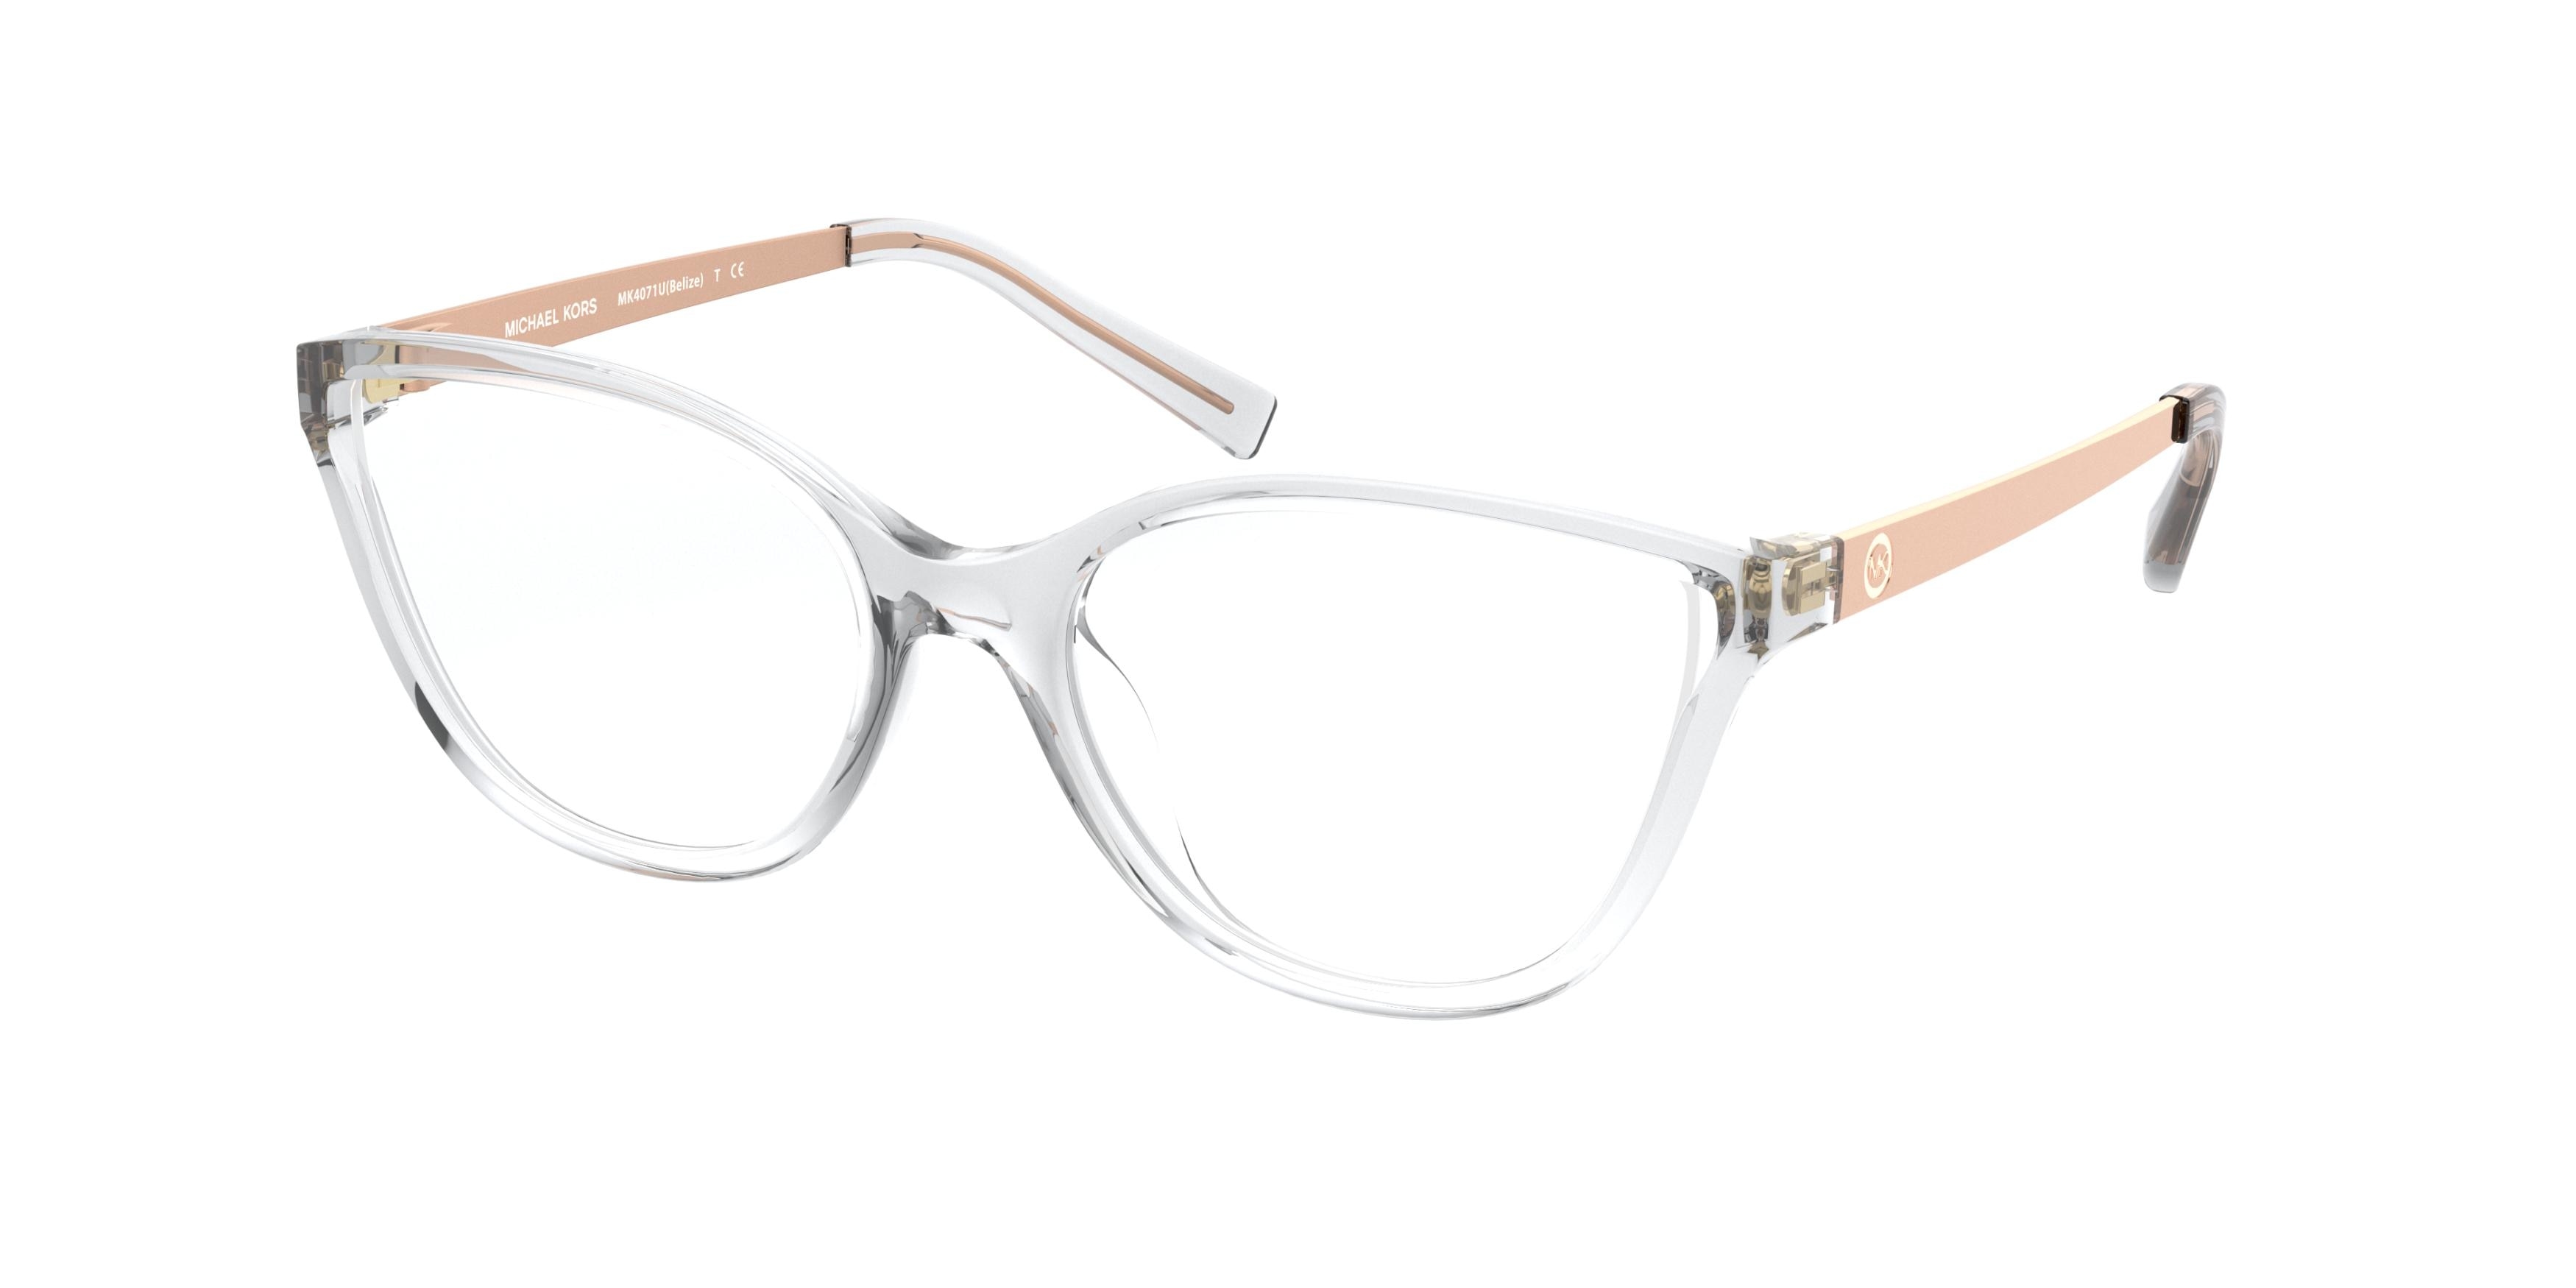 Buy Michael Kors Eyeglasses directly from OpticsFast.com